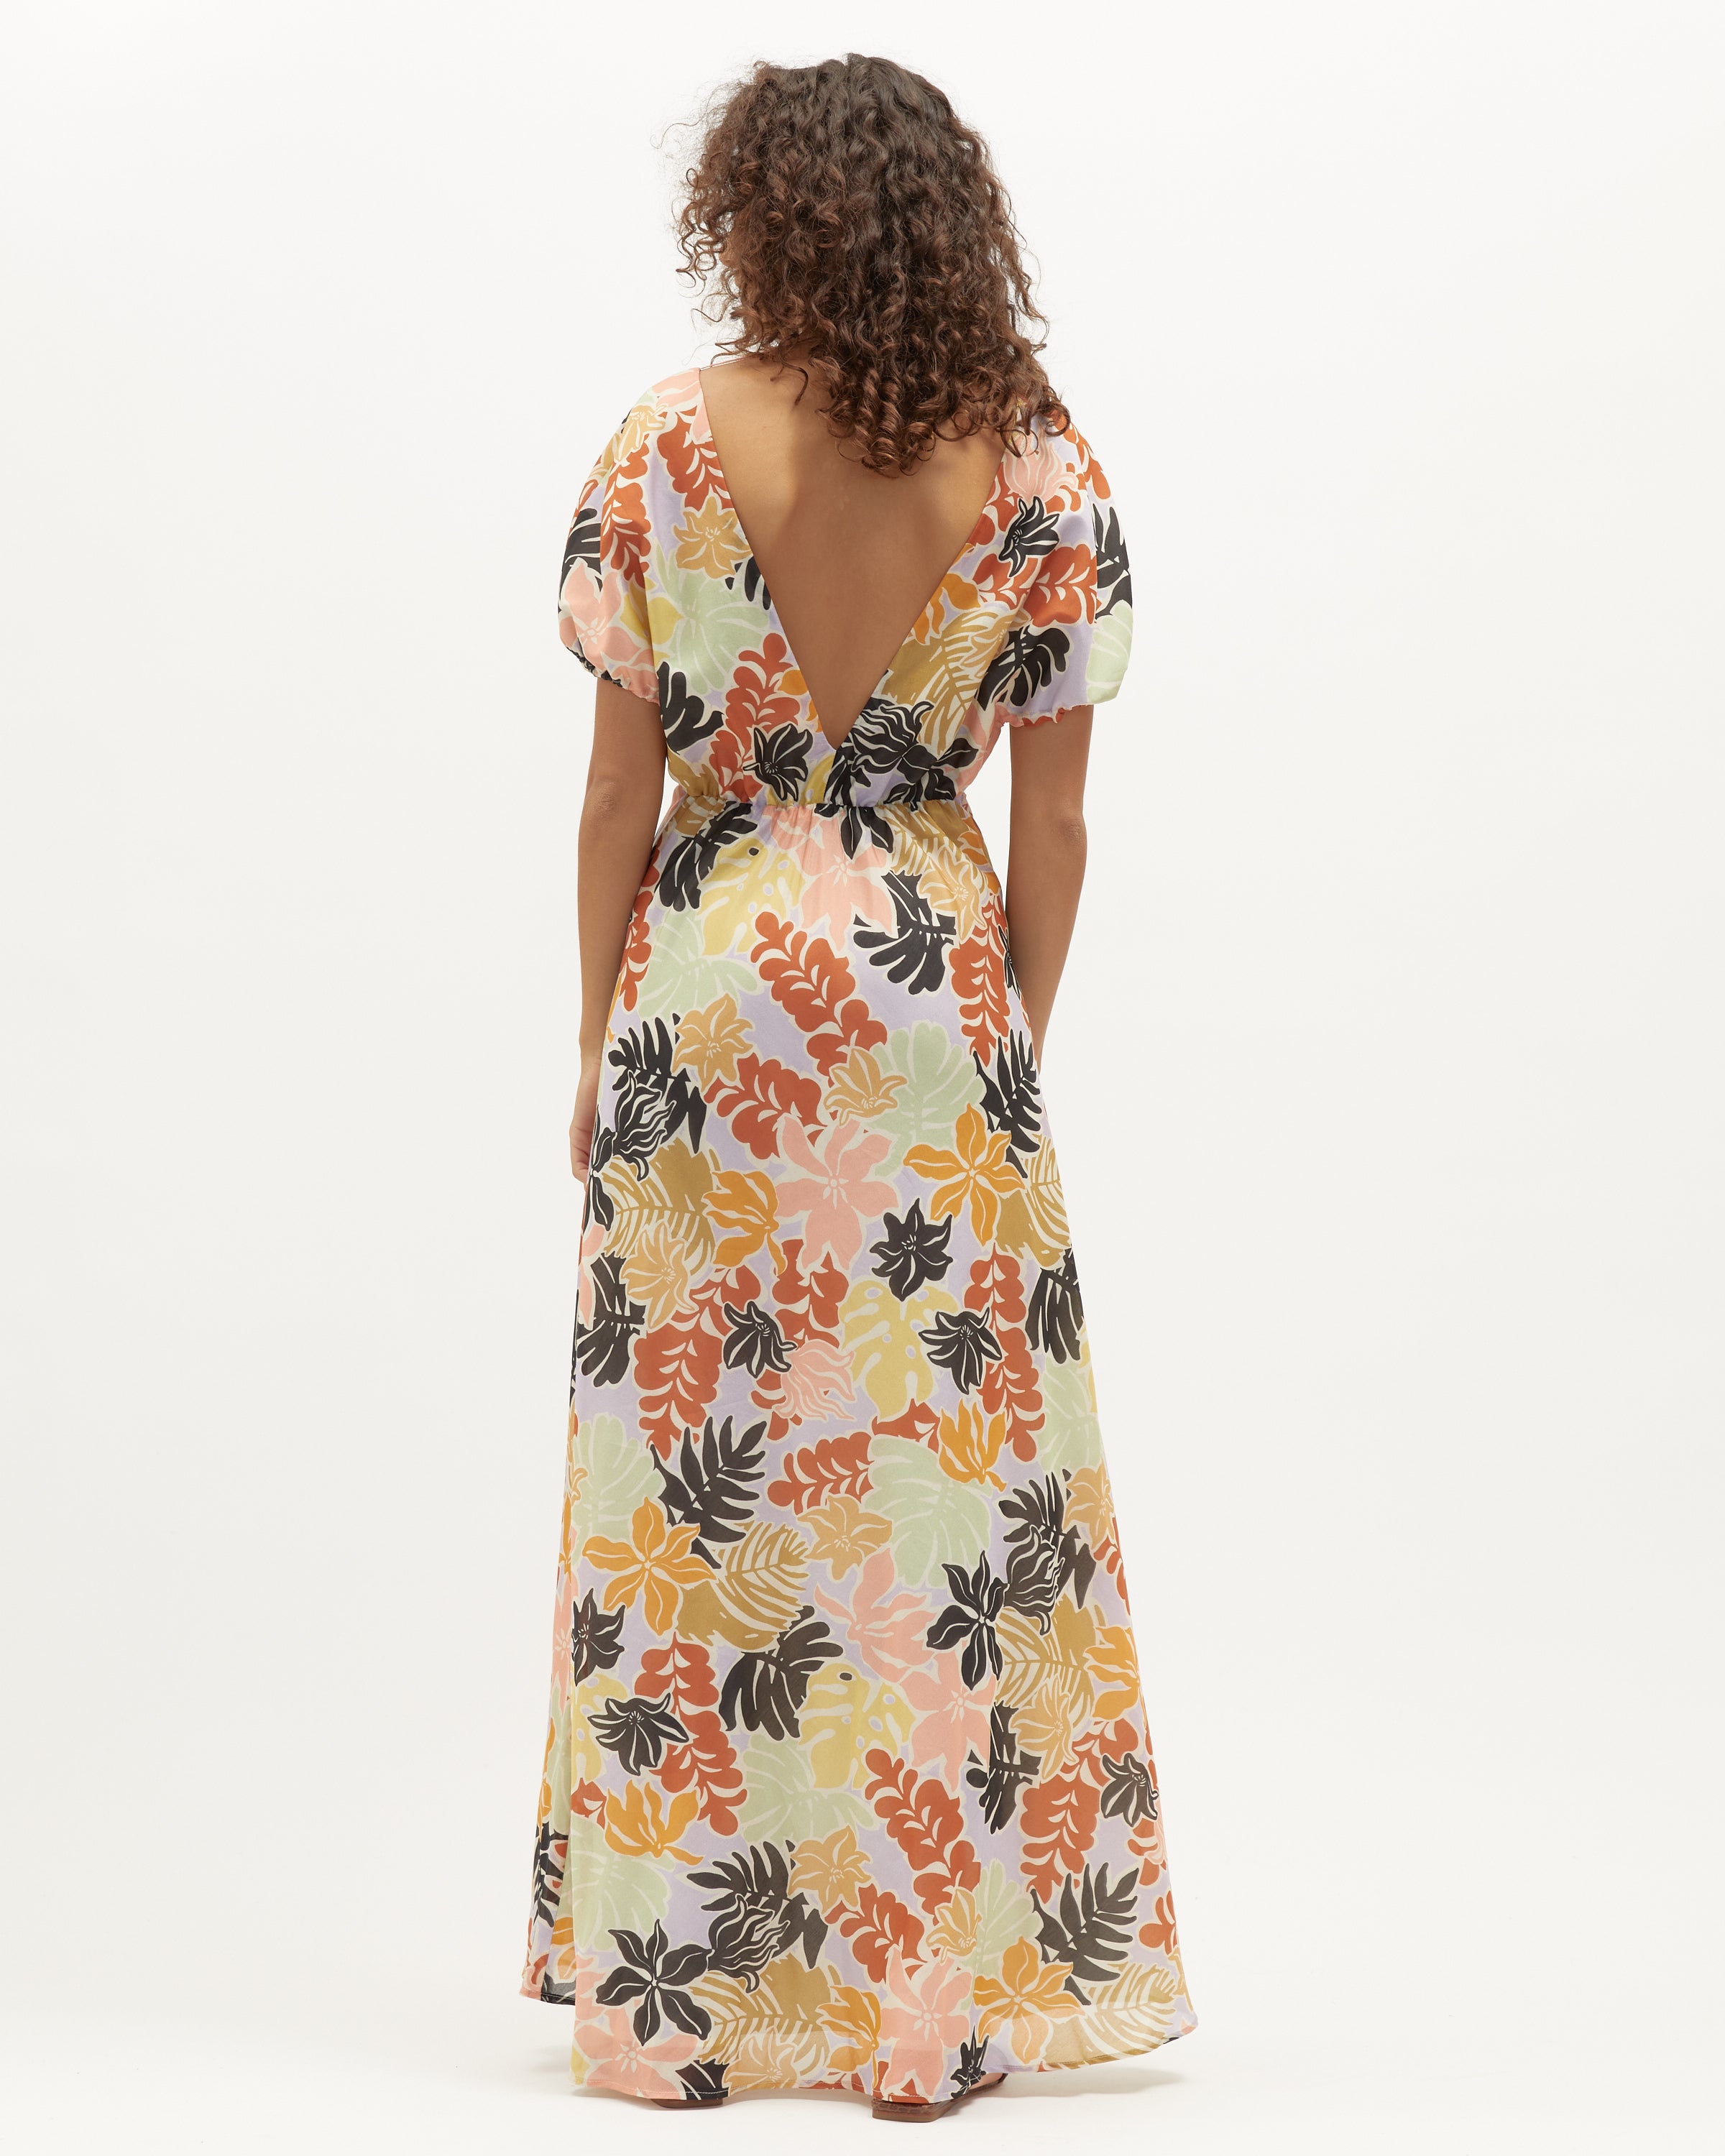 Adaline Dress | Louise Floral $590